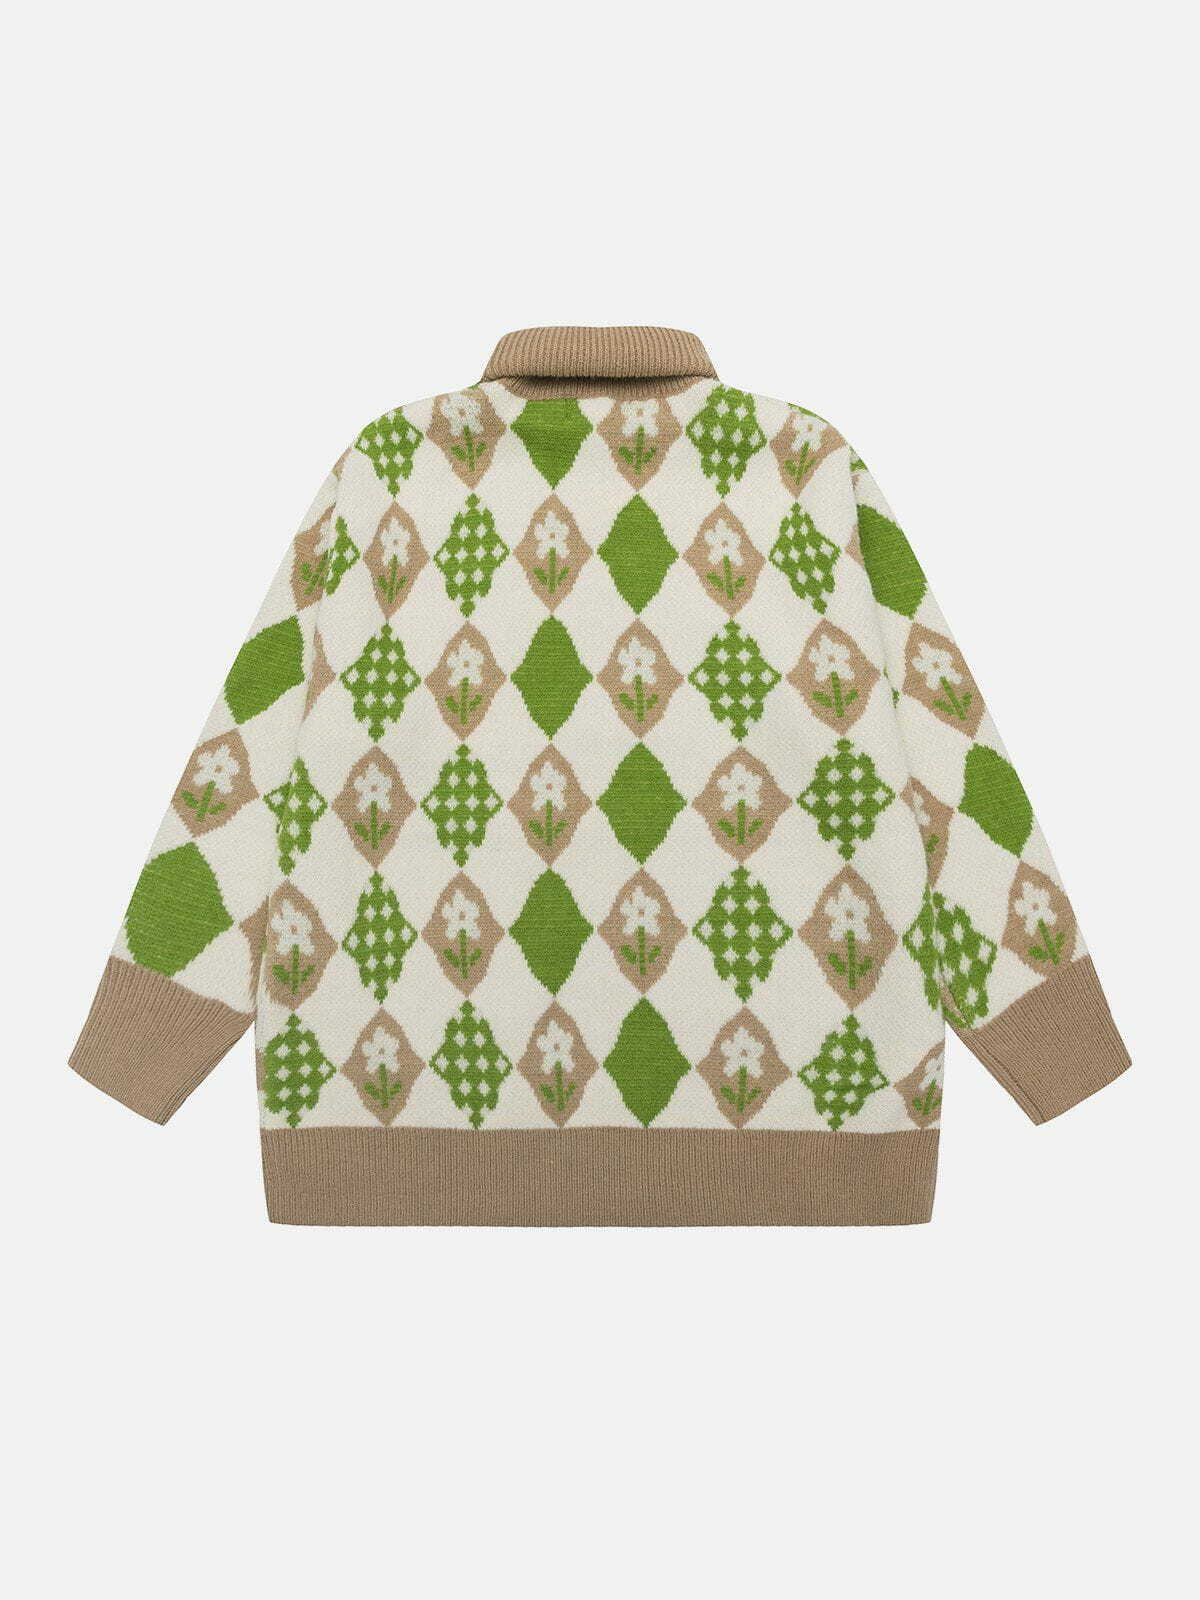 floral argyle turtleneck sweater edgy & vibrant streetwear 6363